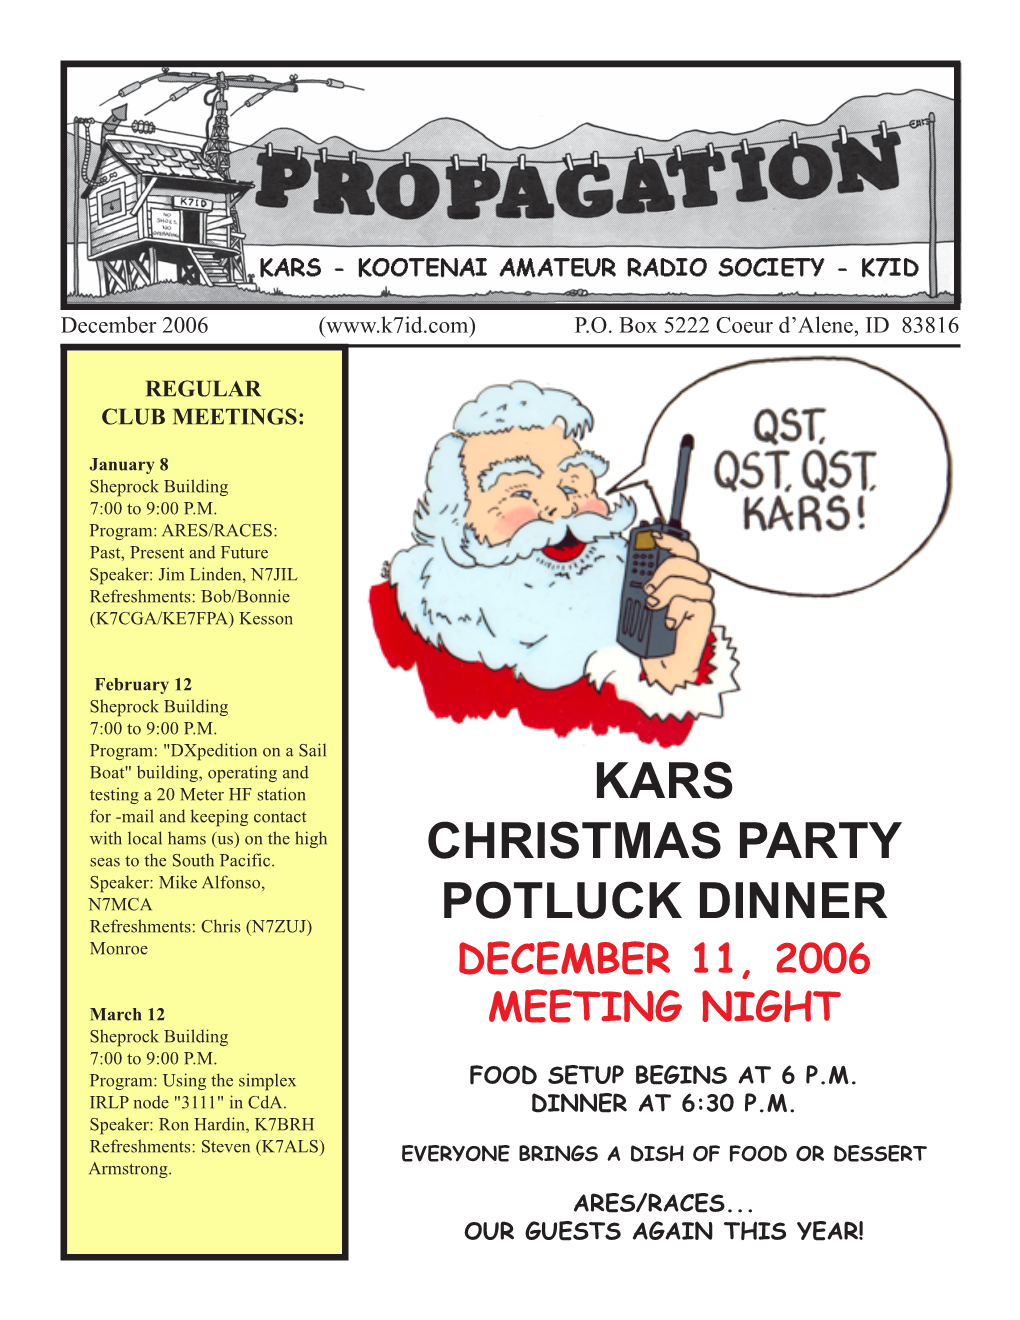 Kars Christmas Party Potluck Dinner